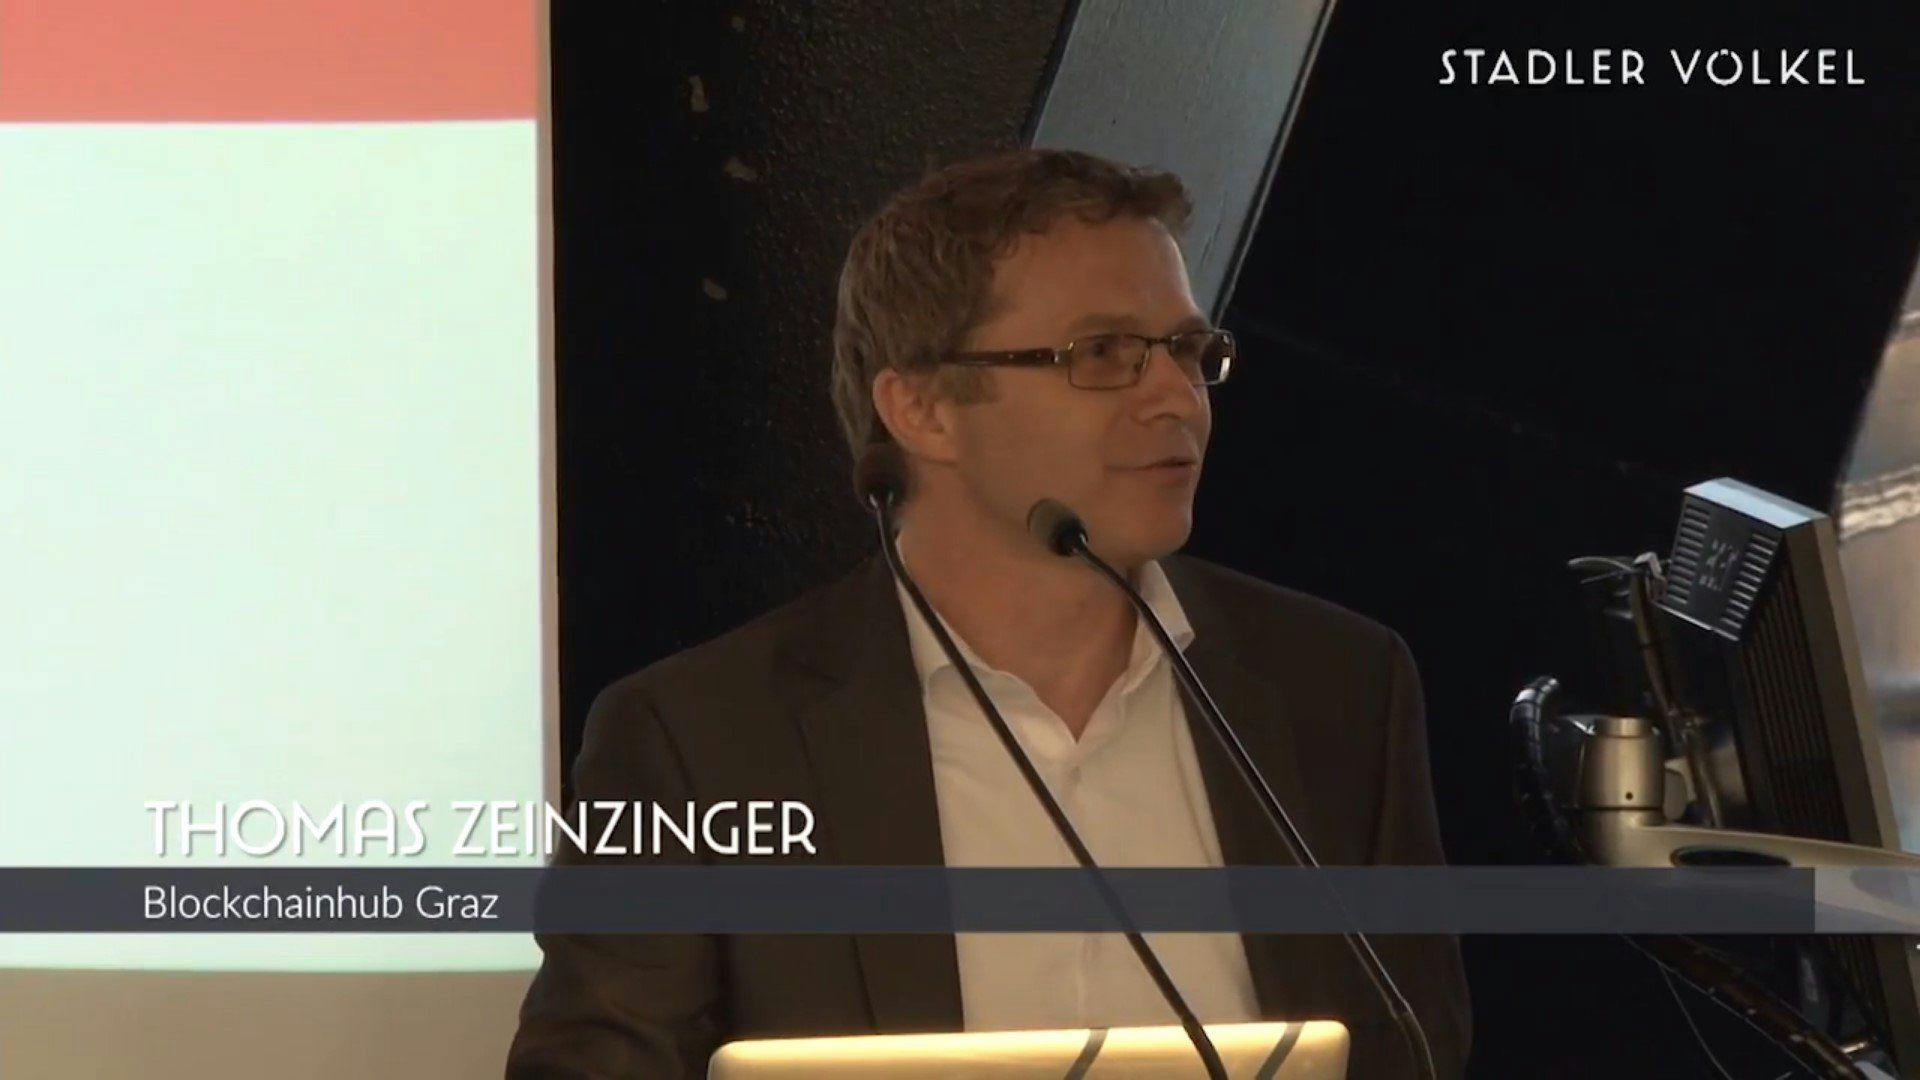 Thomas Zeinzinger on the use of blockchain